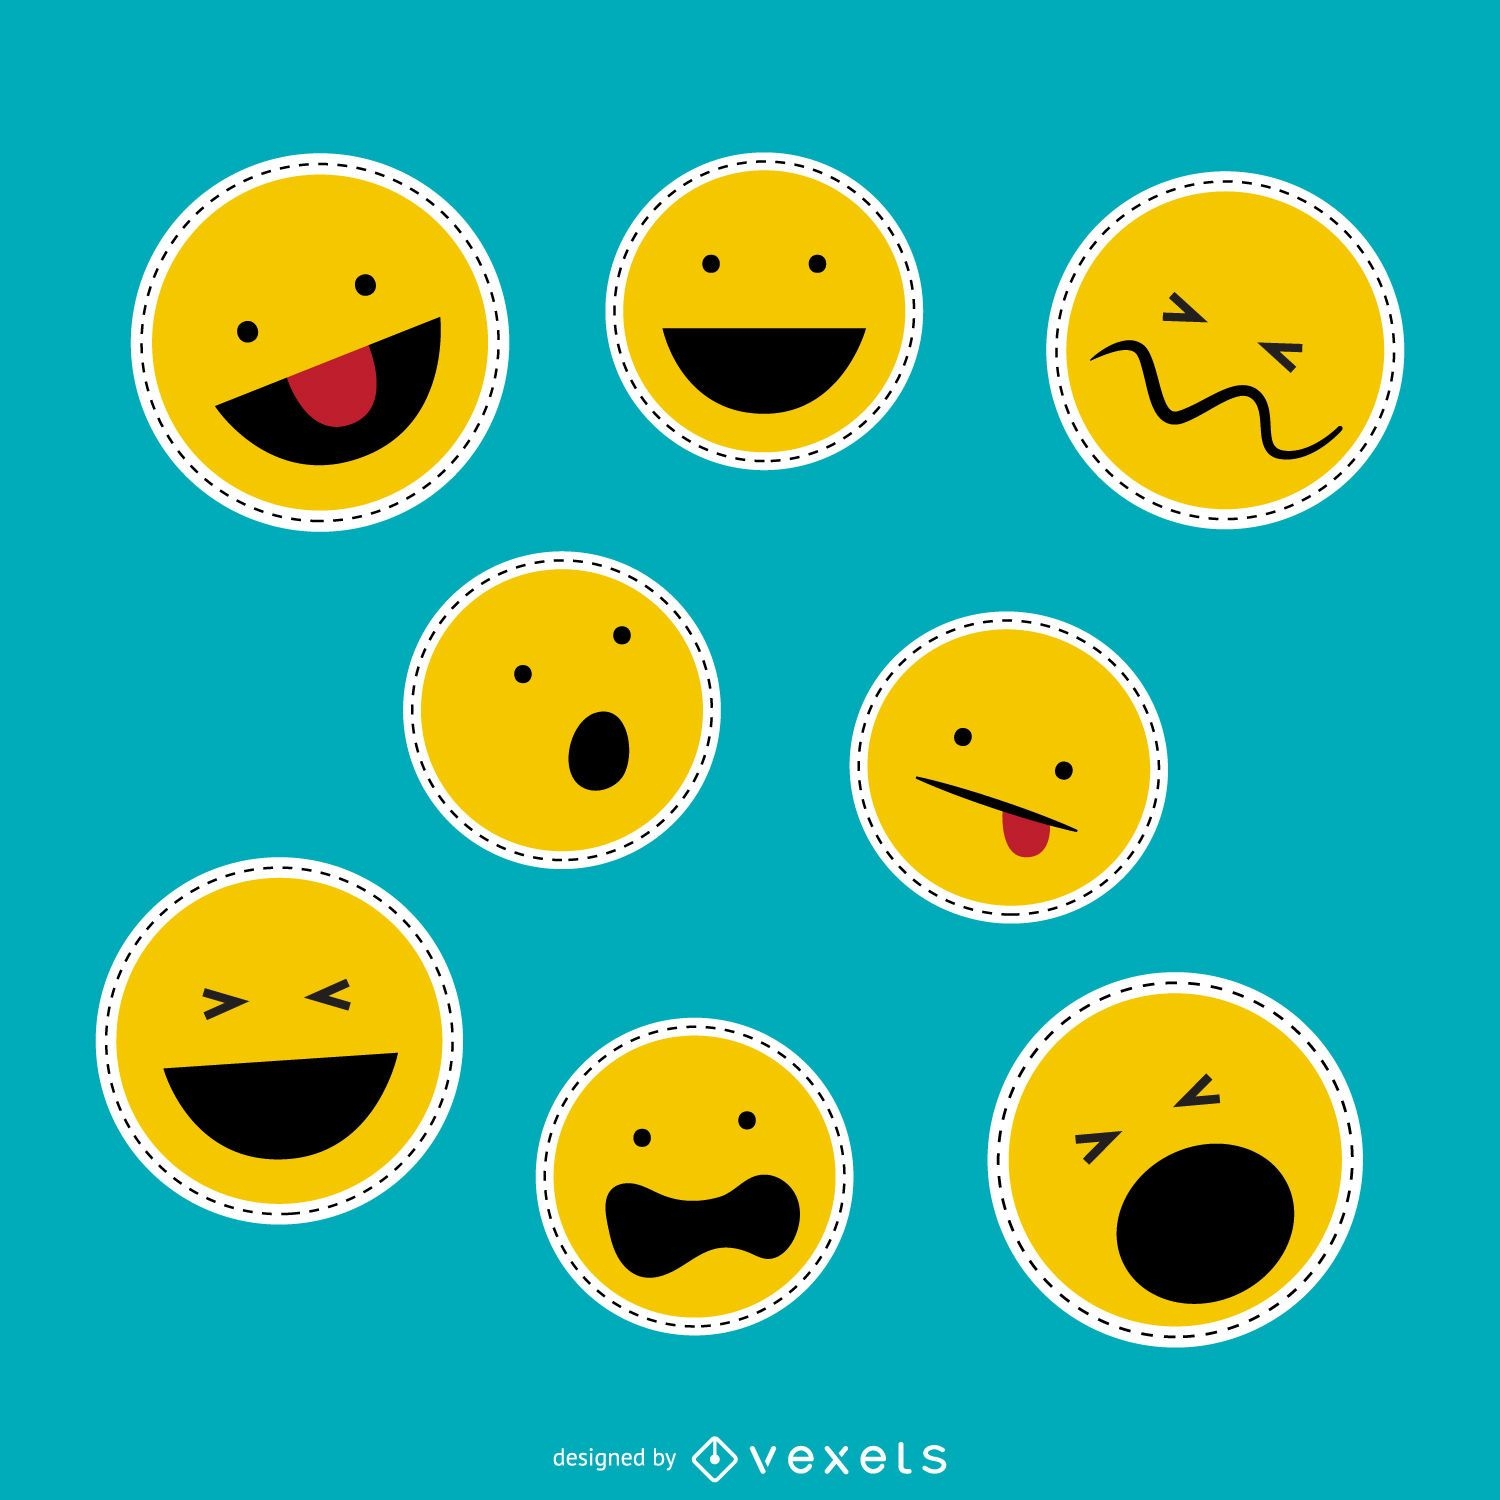 Emoji patches set